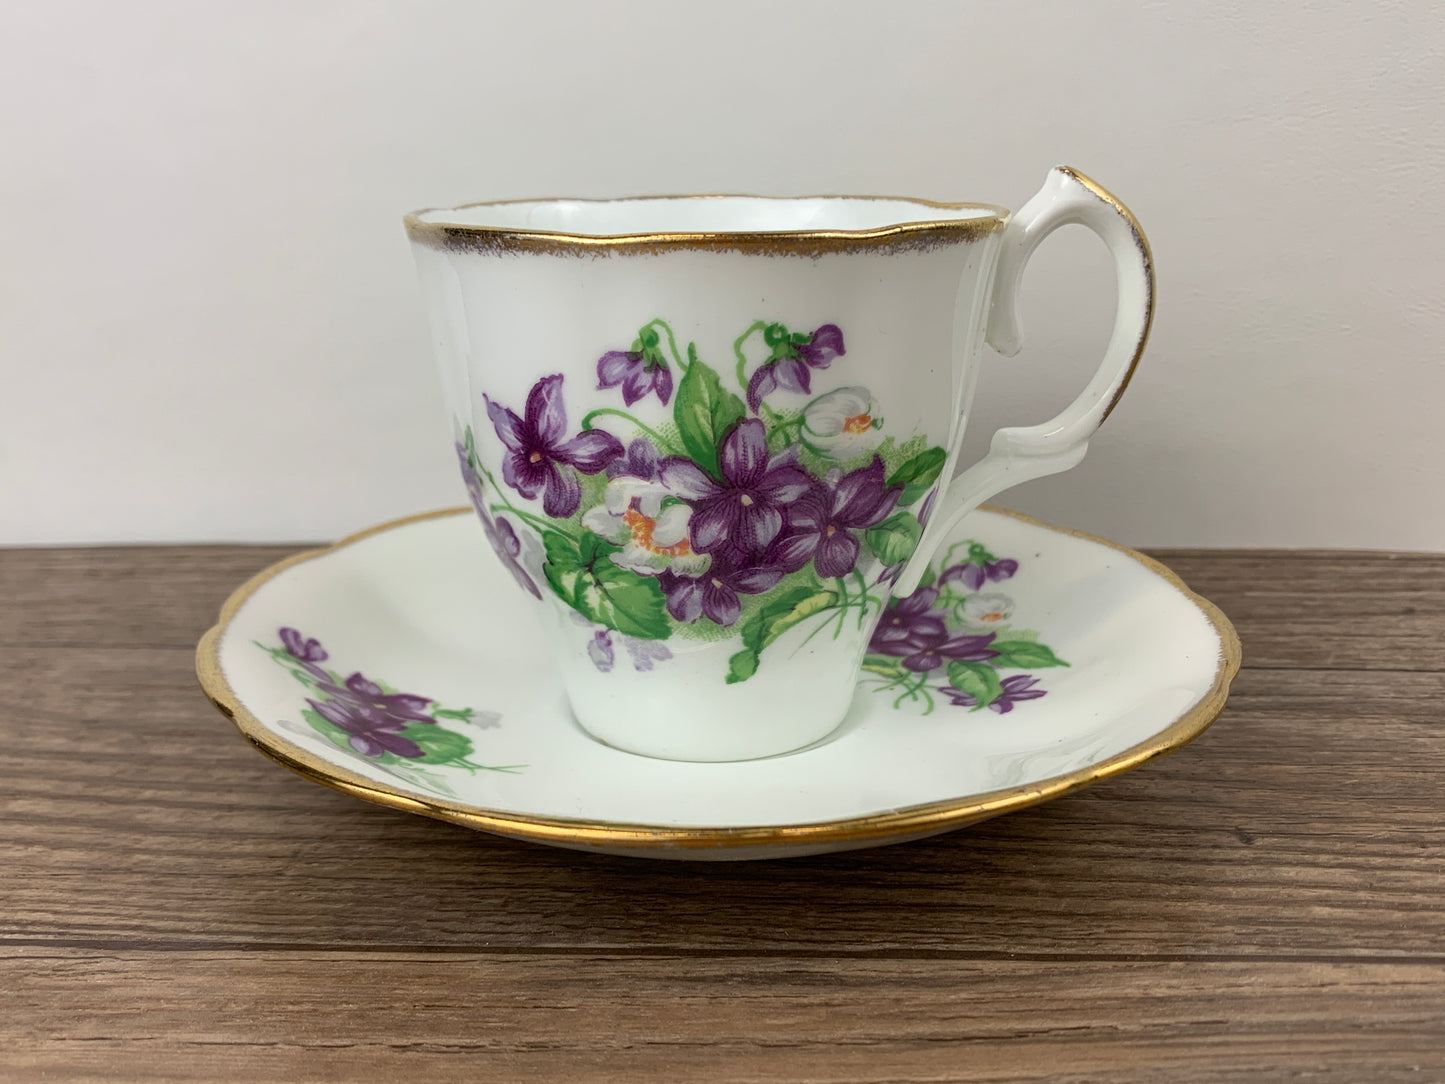 Vintage English Teacup with Purple Violets